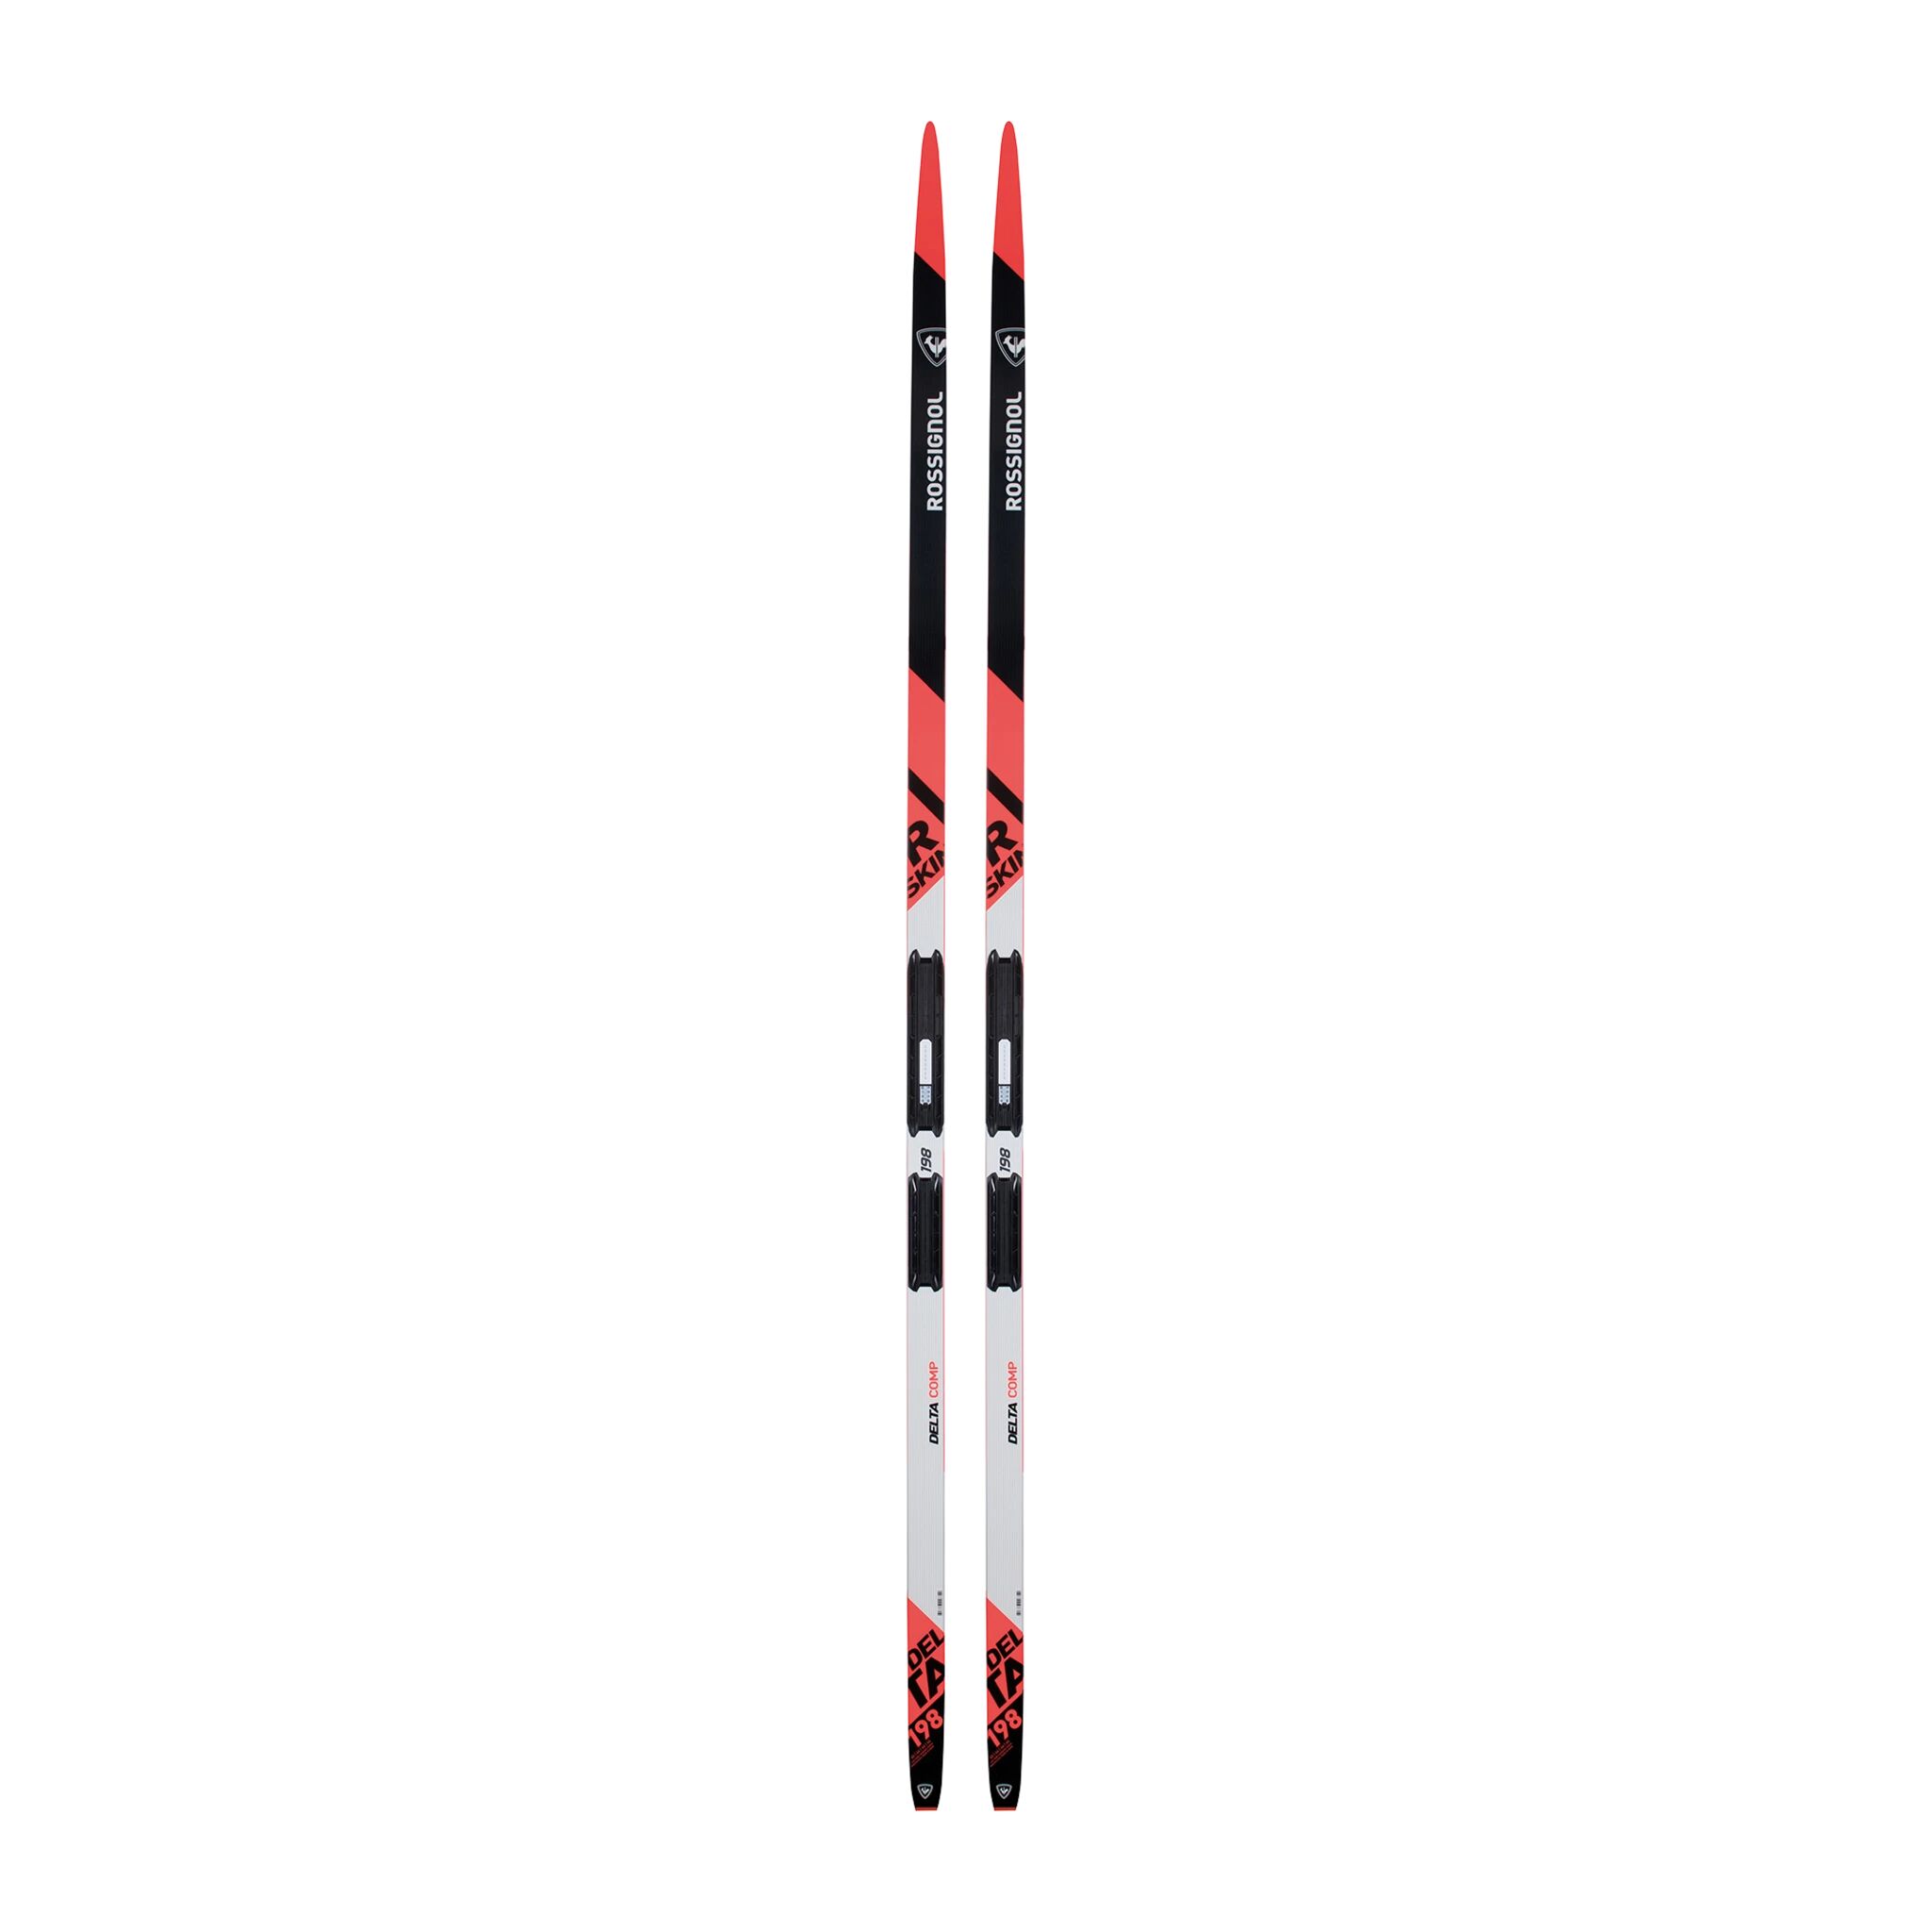 Rossignol XC Skis R-Skin Delta Comp -IFP 21/22, felleski unisex 203cm Stiff/80-100kg White/Red